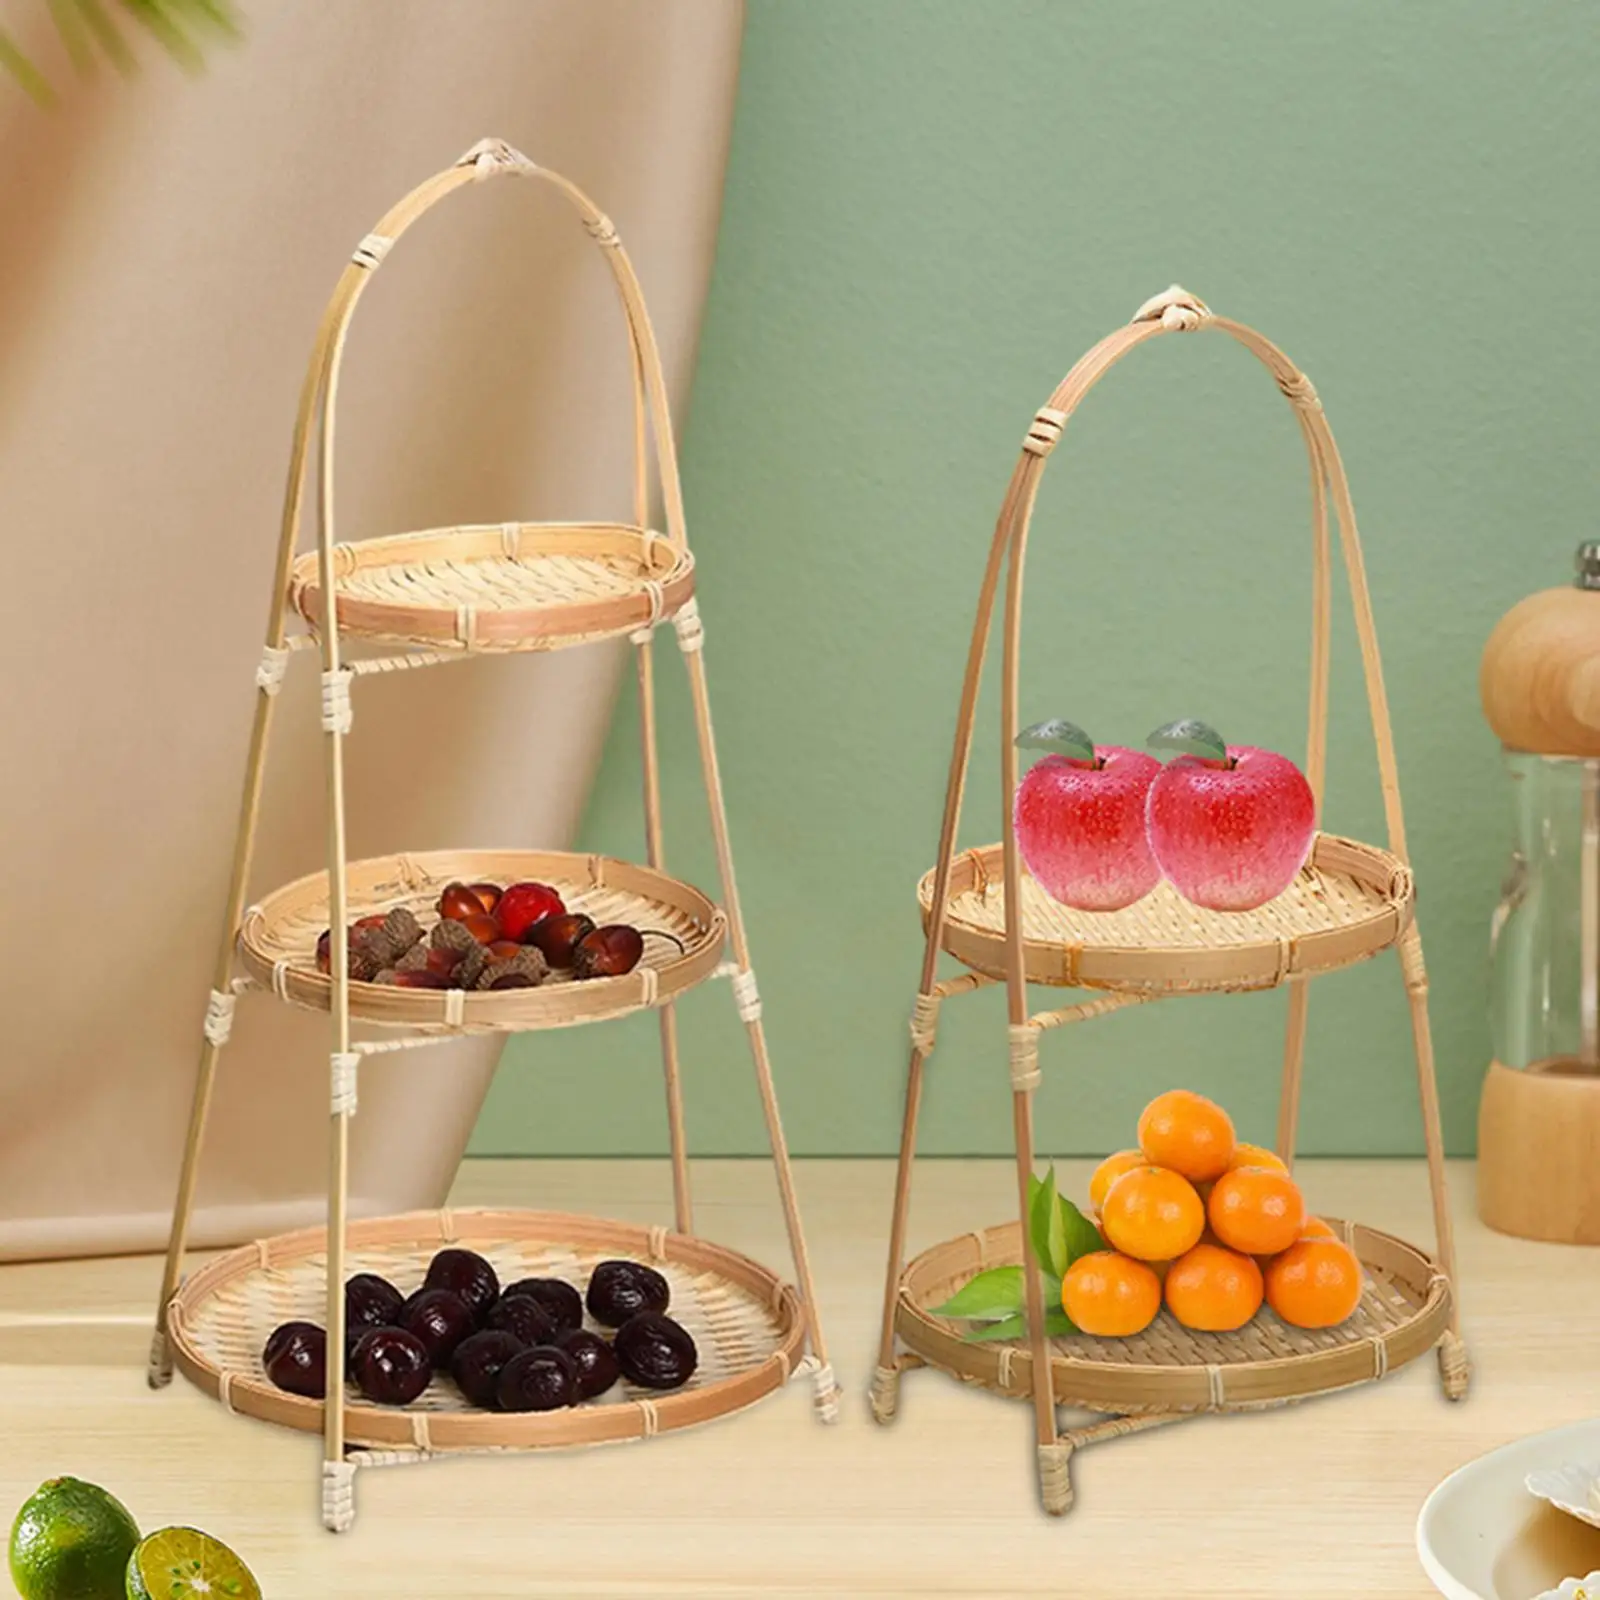 Serving Trays Snack Cookies Display Handwoven Fruit Basket Fruit Basket Organizer for Kitchen Restaurant Table Dining Room